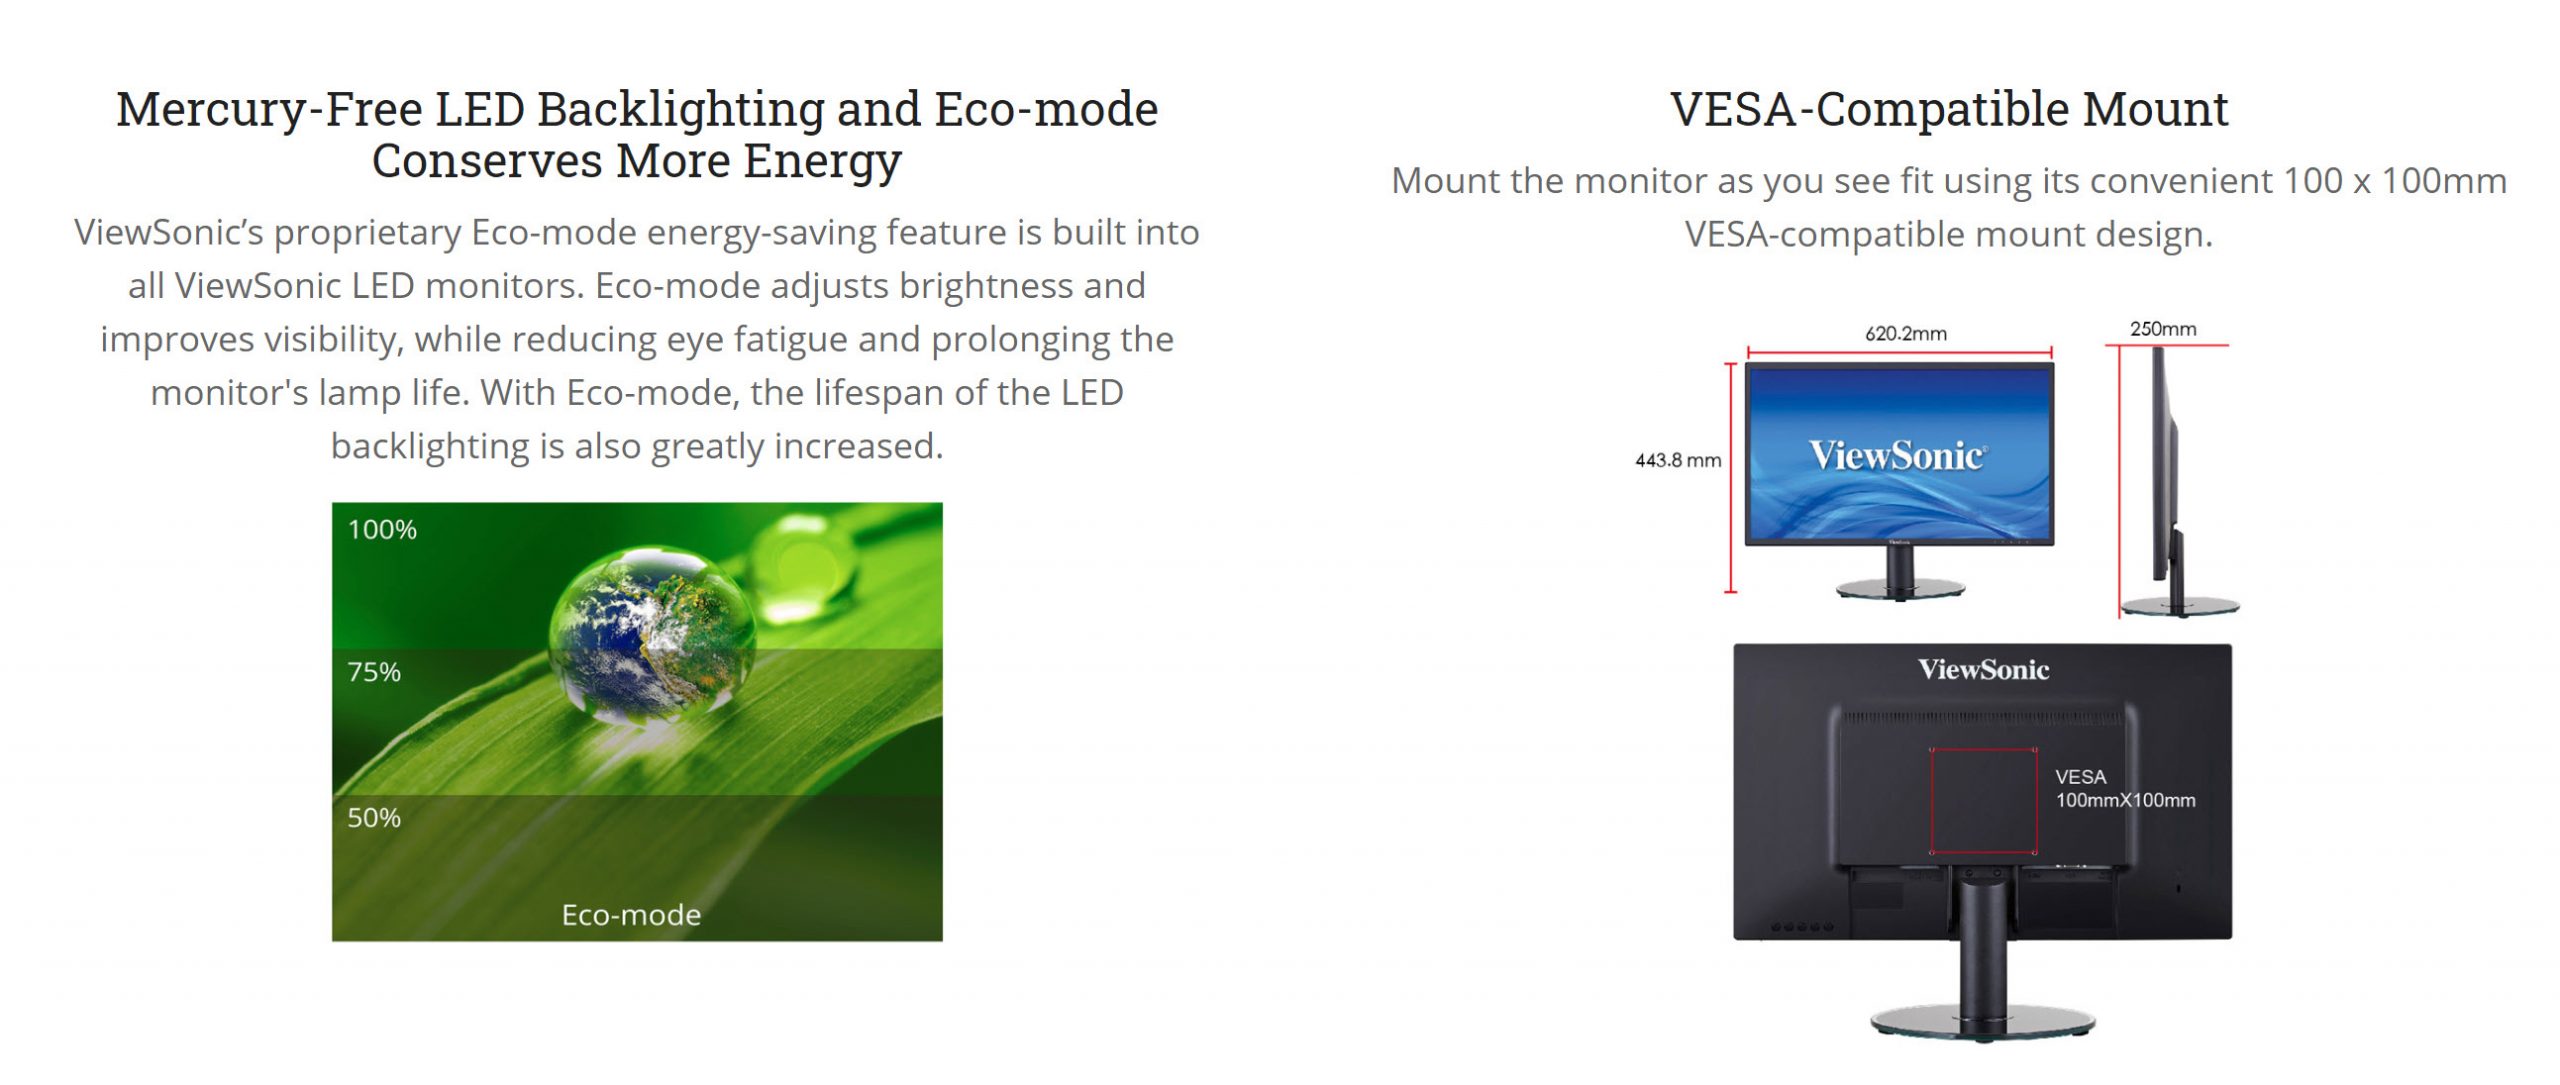 ViewSonic VA2719-sh 27” Full HD SuperClear® IPS LED Monitor – New